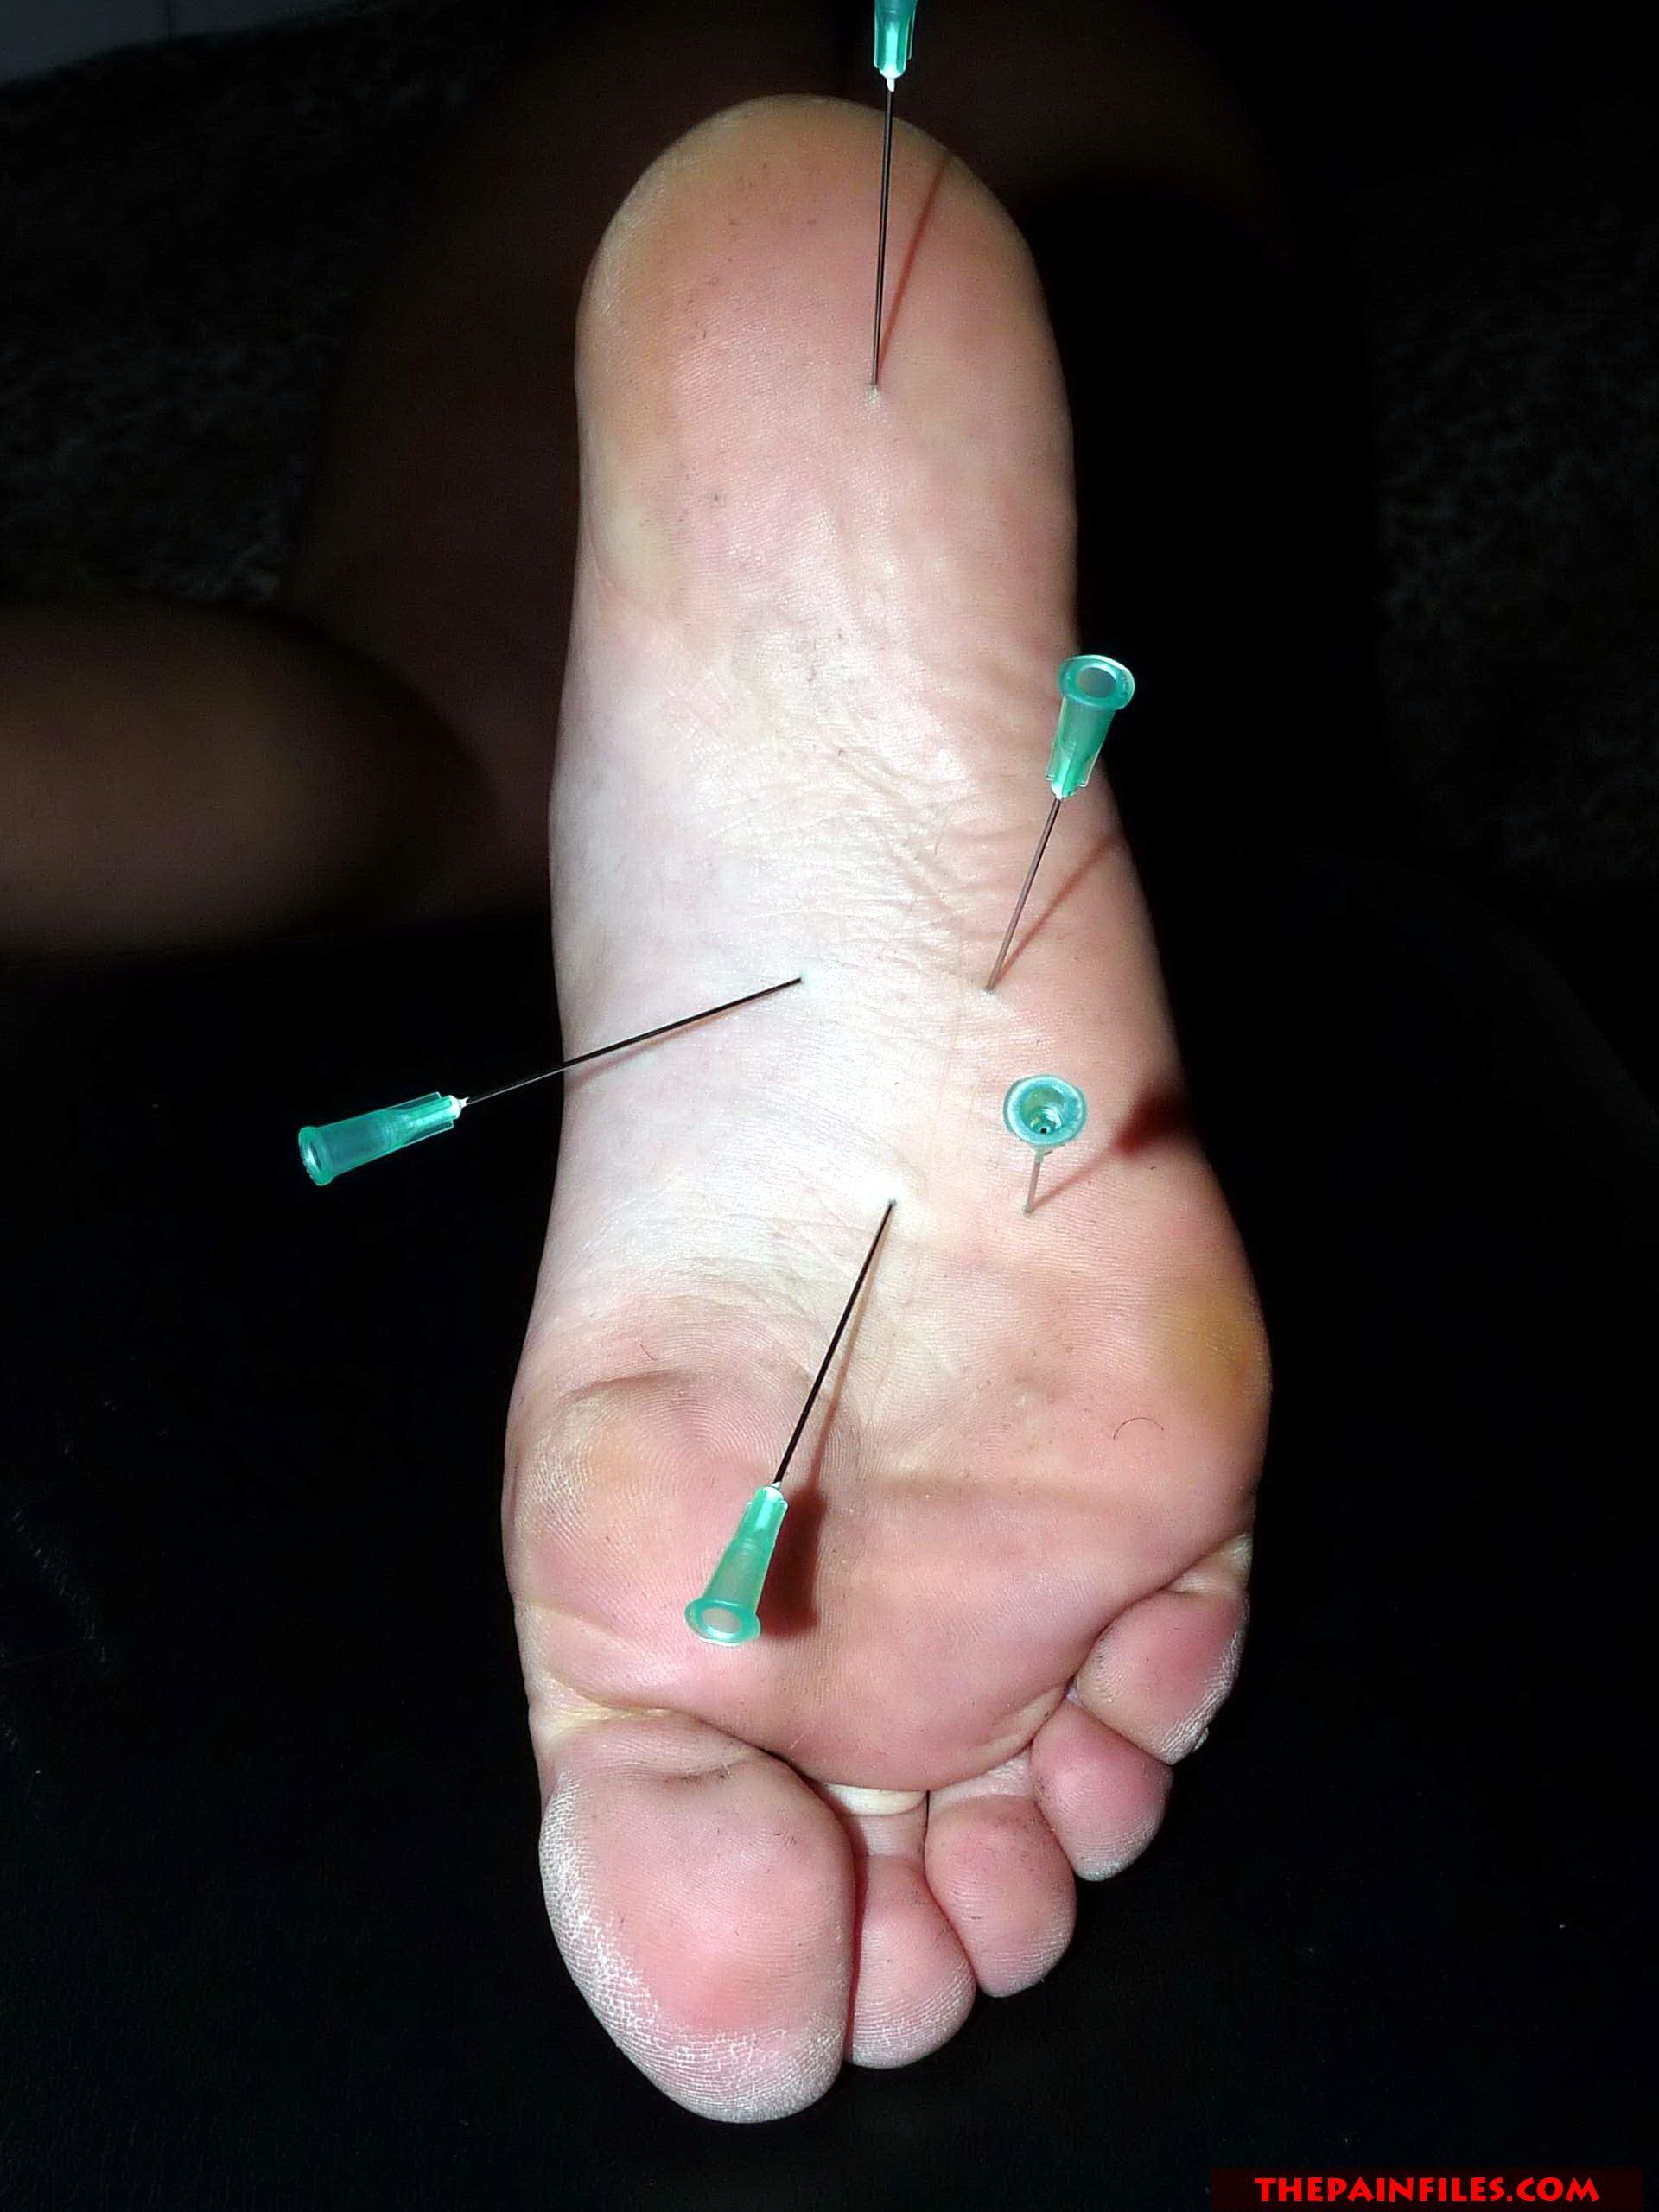 Feet torure needles toes